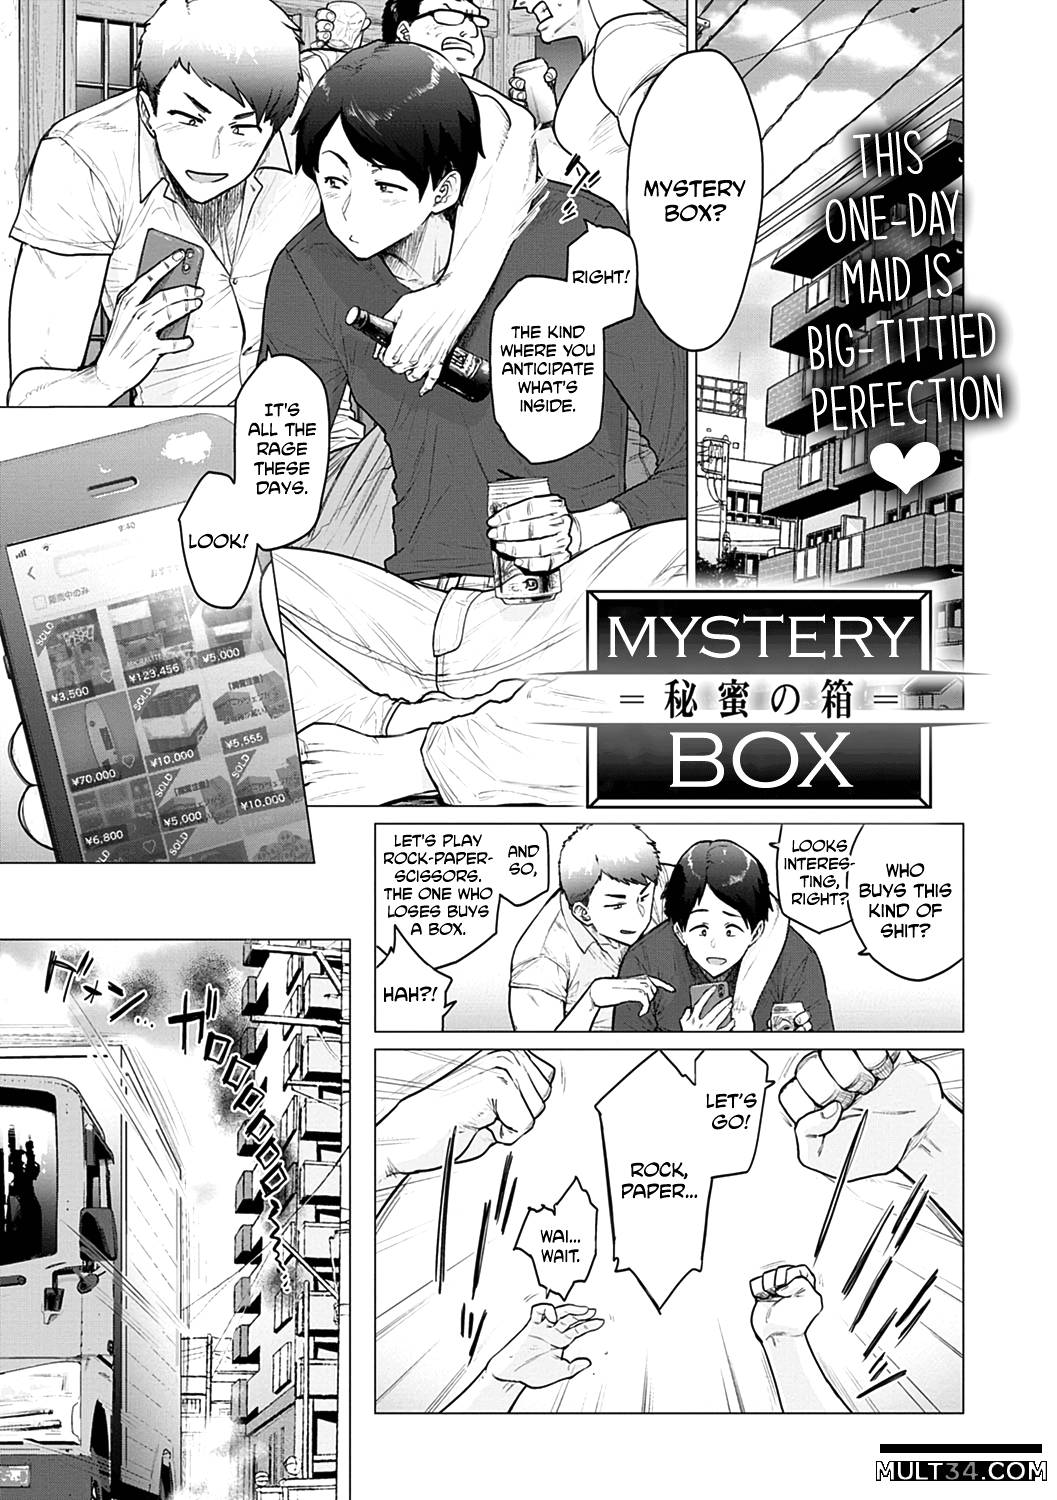 Boxpron Com - Mystery Box porn comic - the best cartoon porn comics, Rule 34 | MULT34